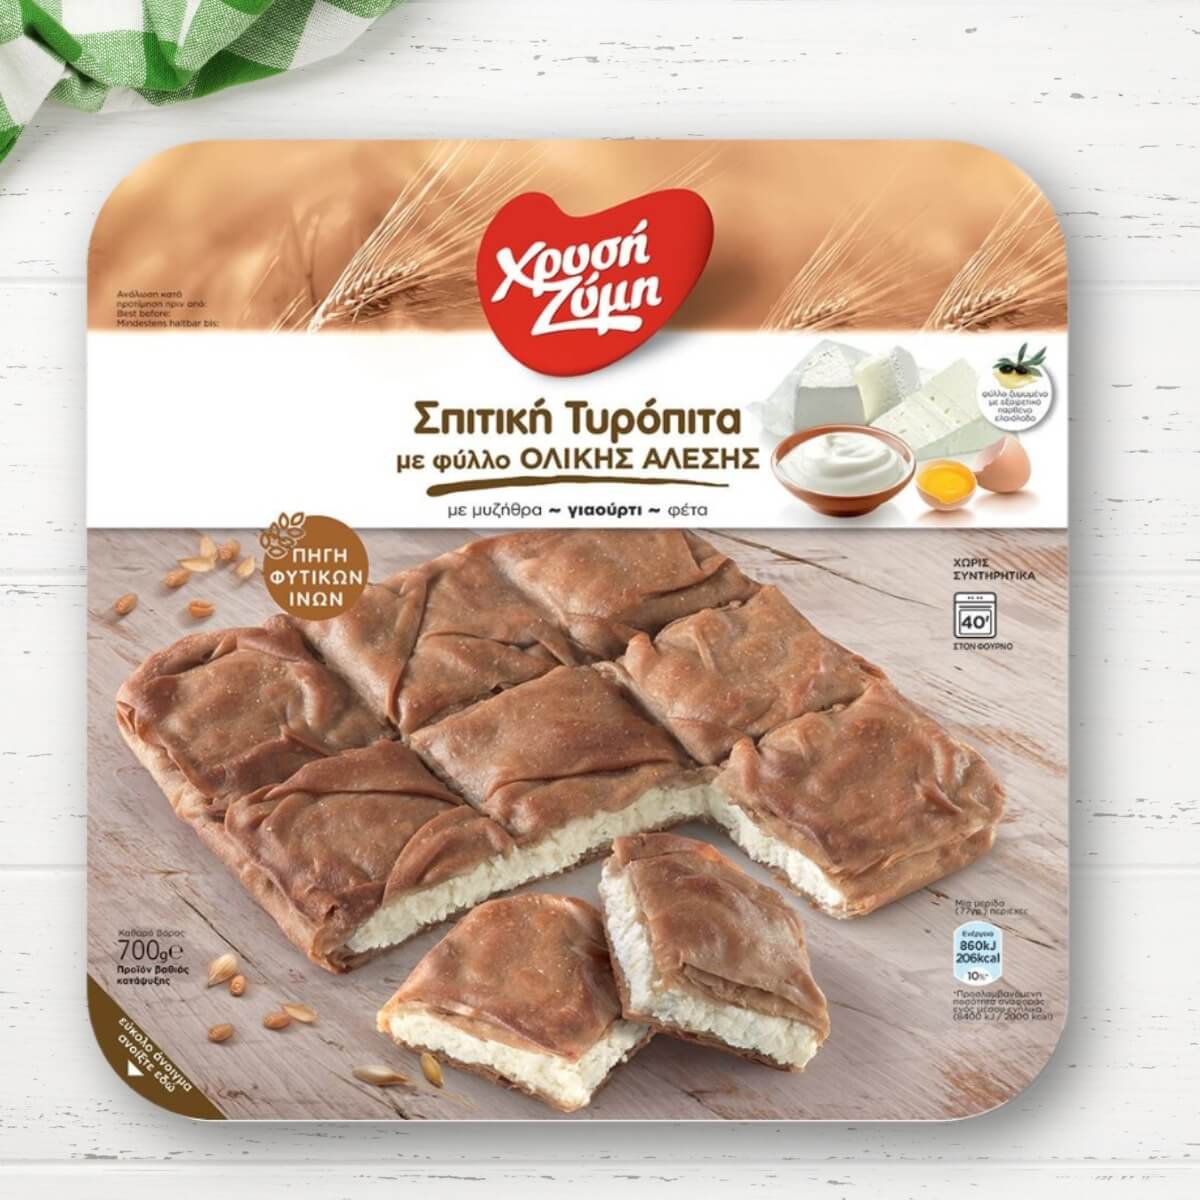 Greek-Grocery-Greek-Products-Homemade-Wholemeal-Tiropita-Feta-pdo-Mizithra-Yogurt-Xrisi-Zimi-700g

